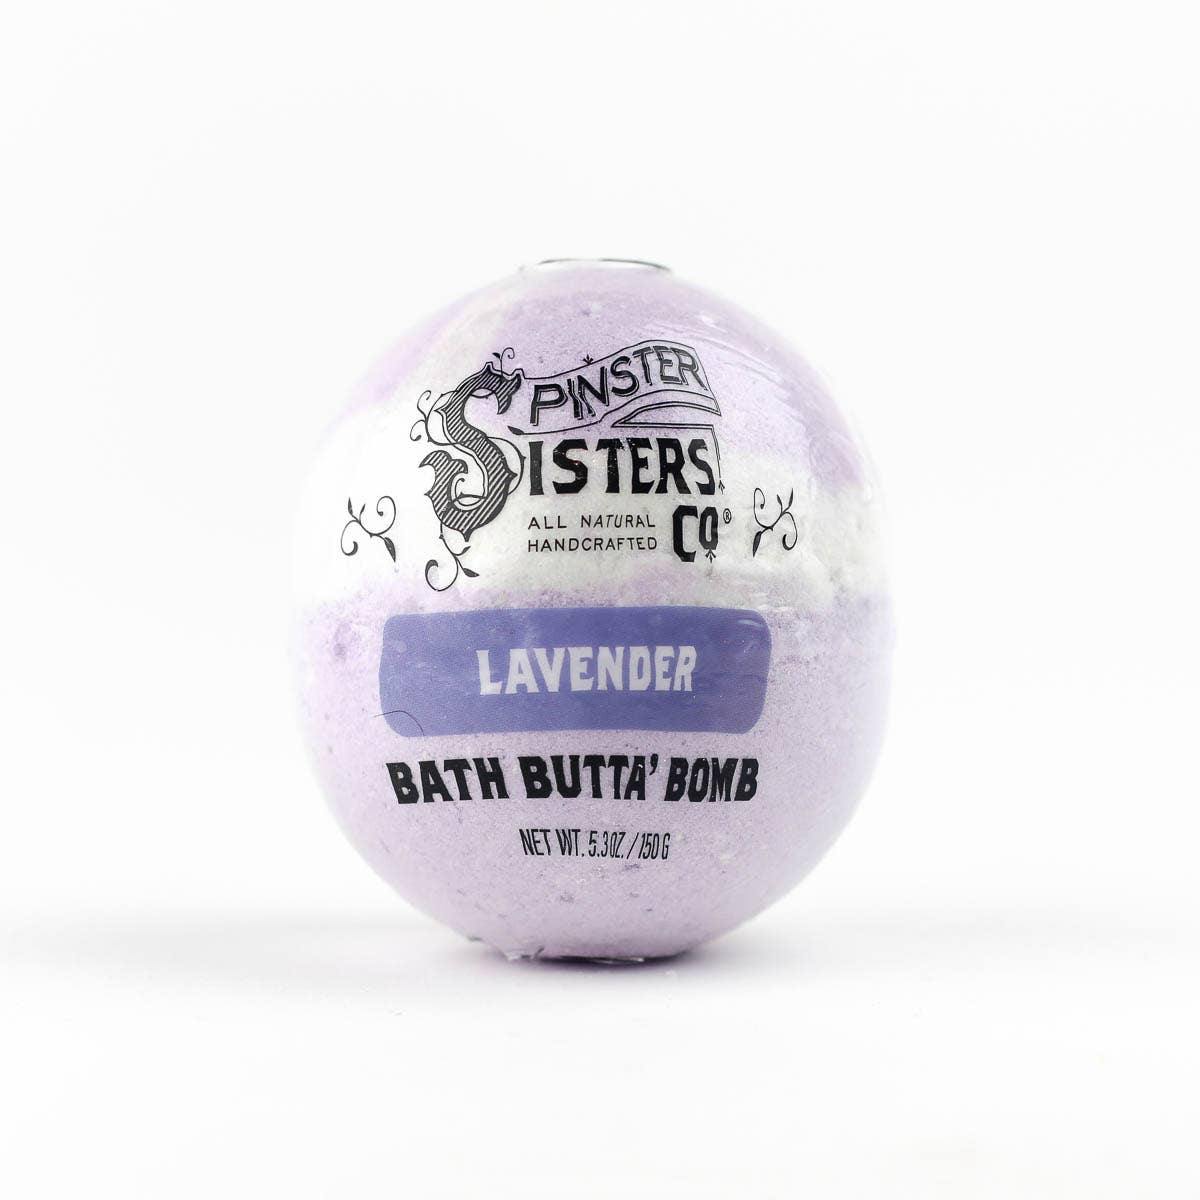 Bath Butta' Bomb - Revival Phl